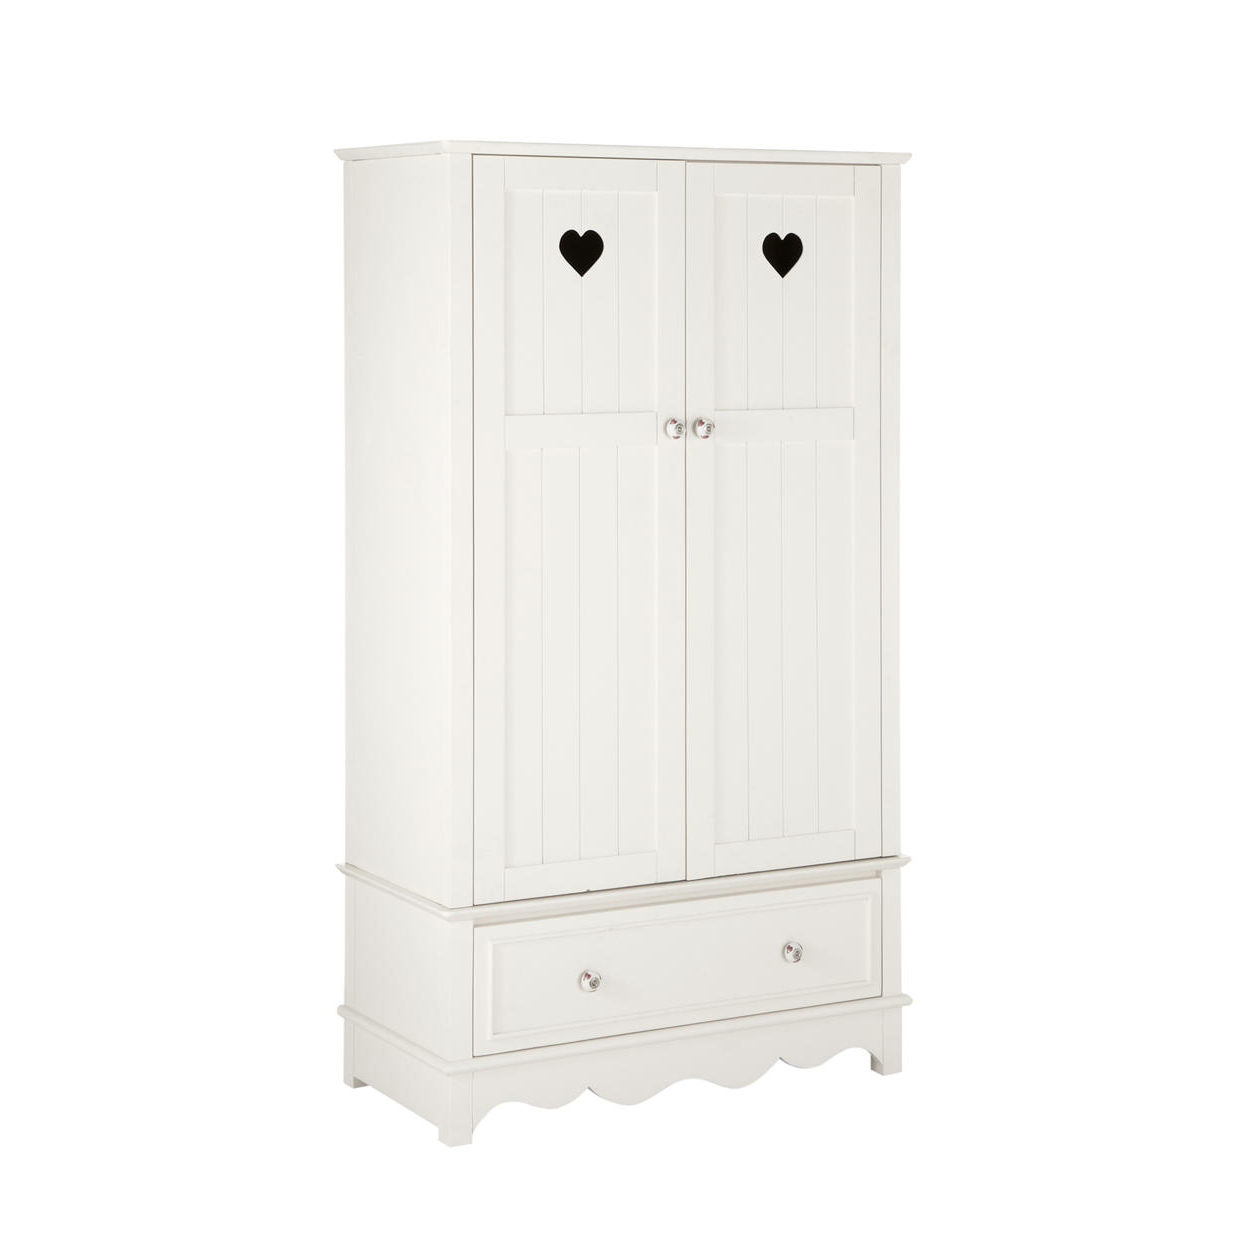 wholesale white wardrobe wooden cupboard designs of bedroom